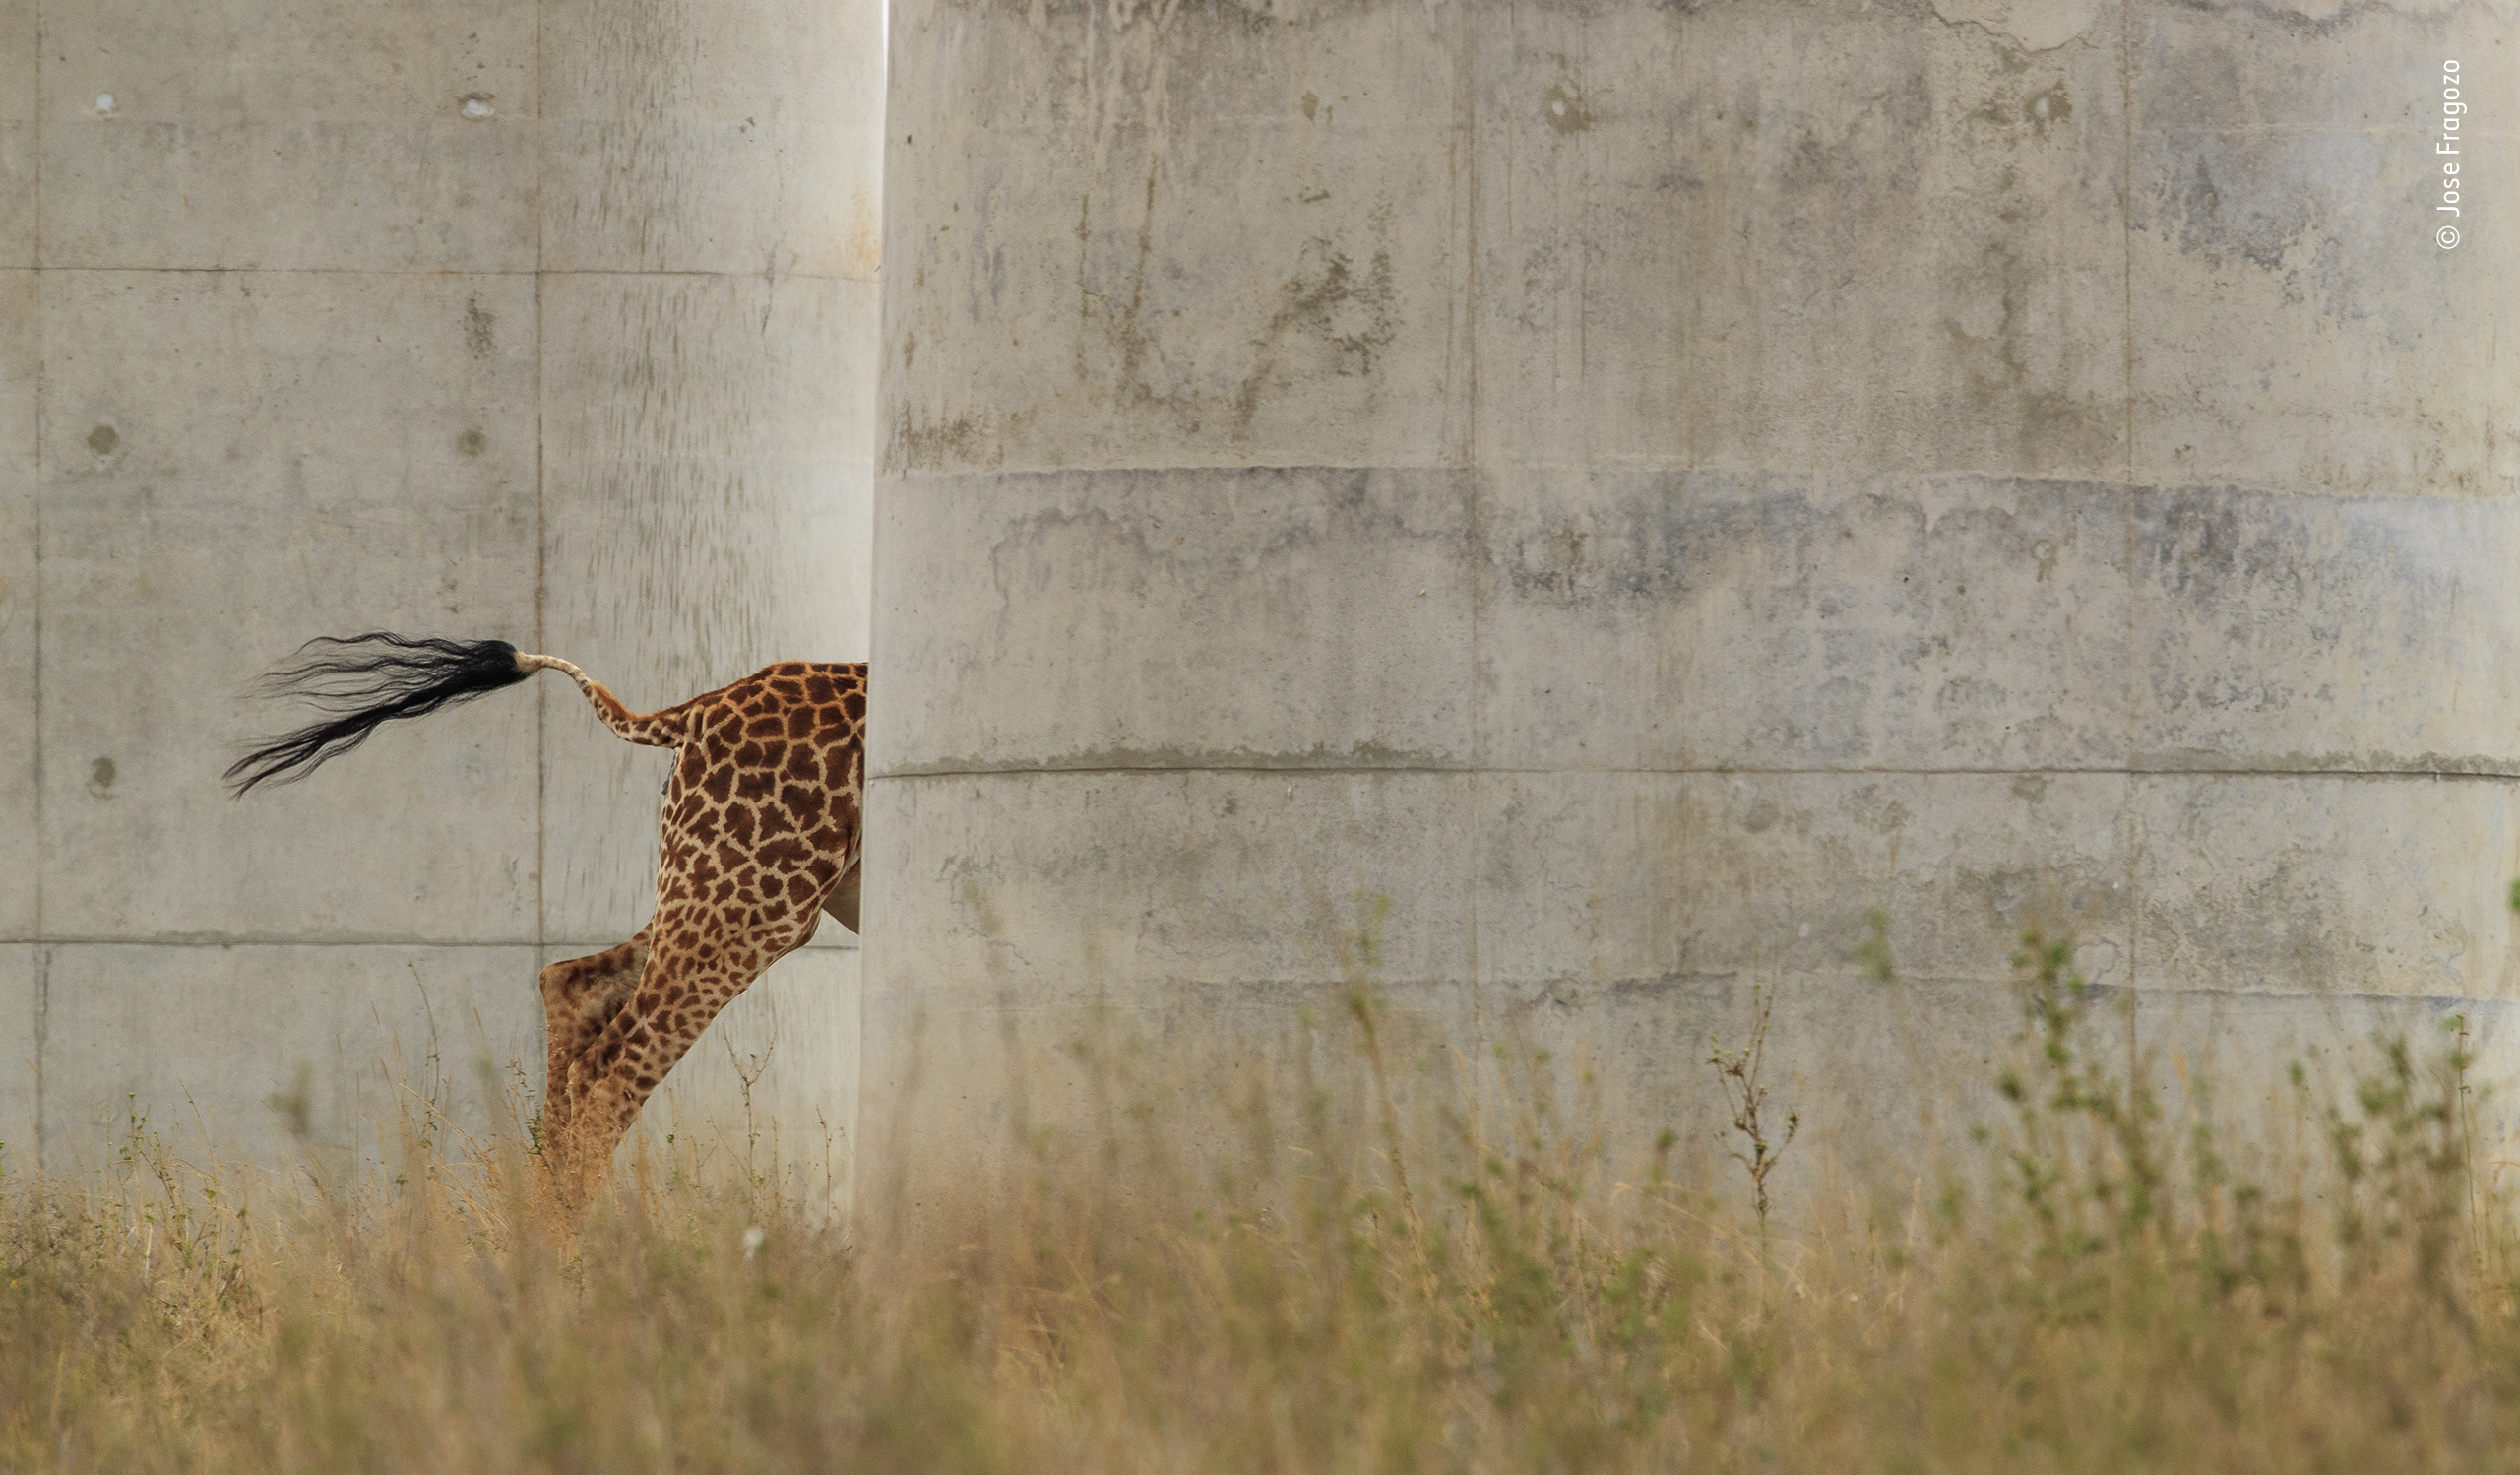 Giraffe disappearing between concrete railway pillars in Nairobi, Kenya